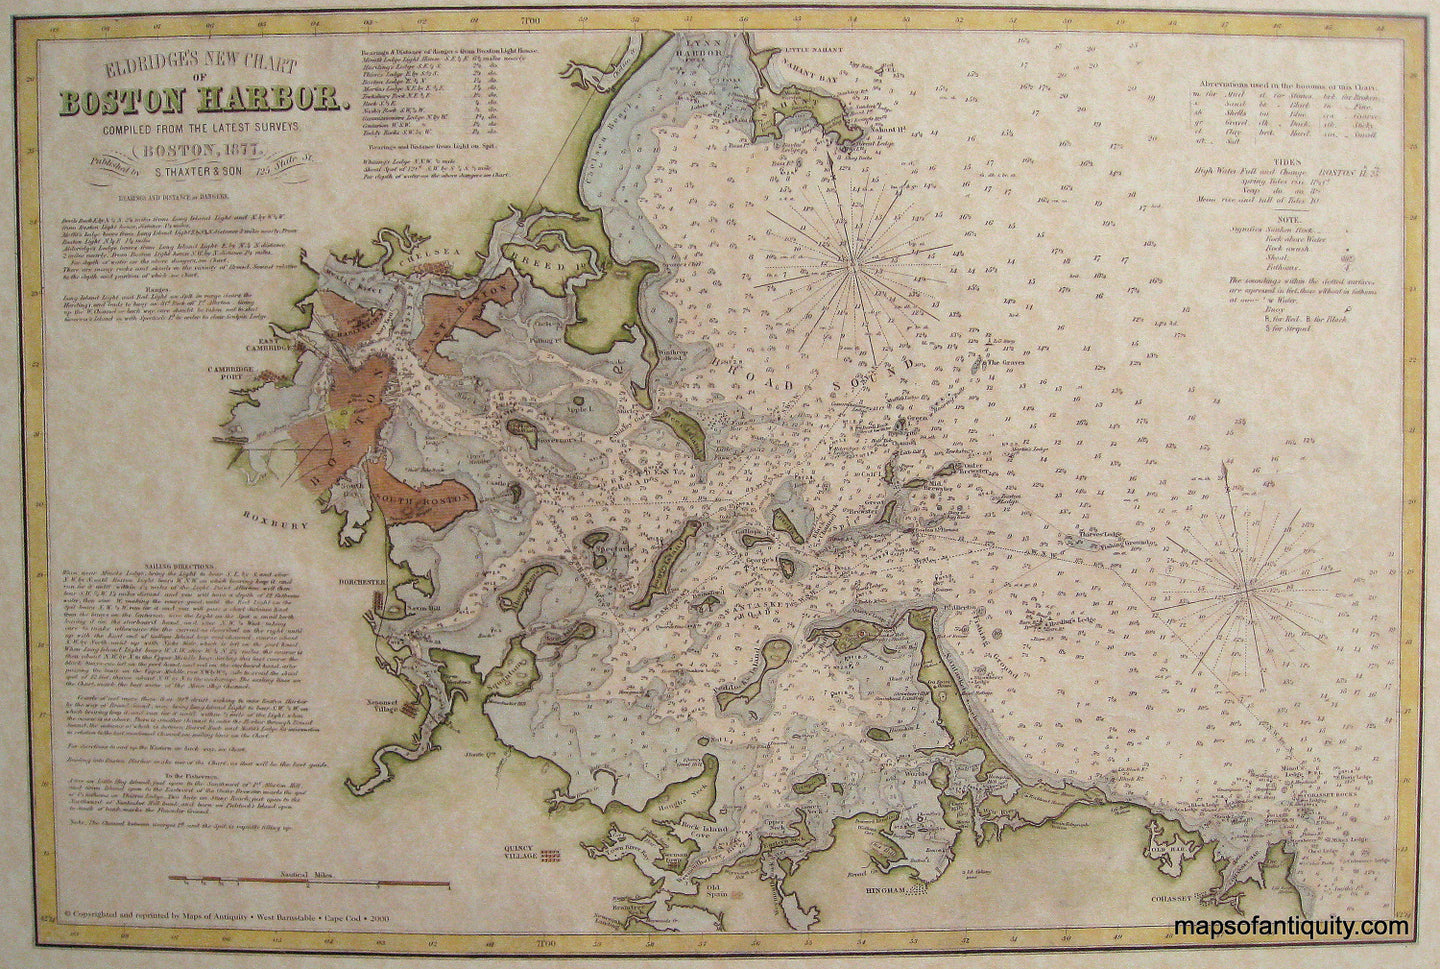 Reproduction-Map-Eldridge's-New-Chart-of-Boston-Harbor